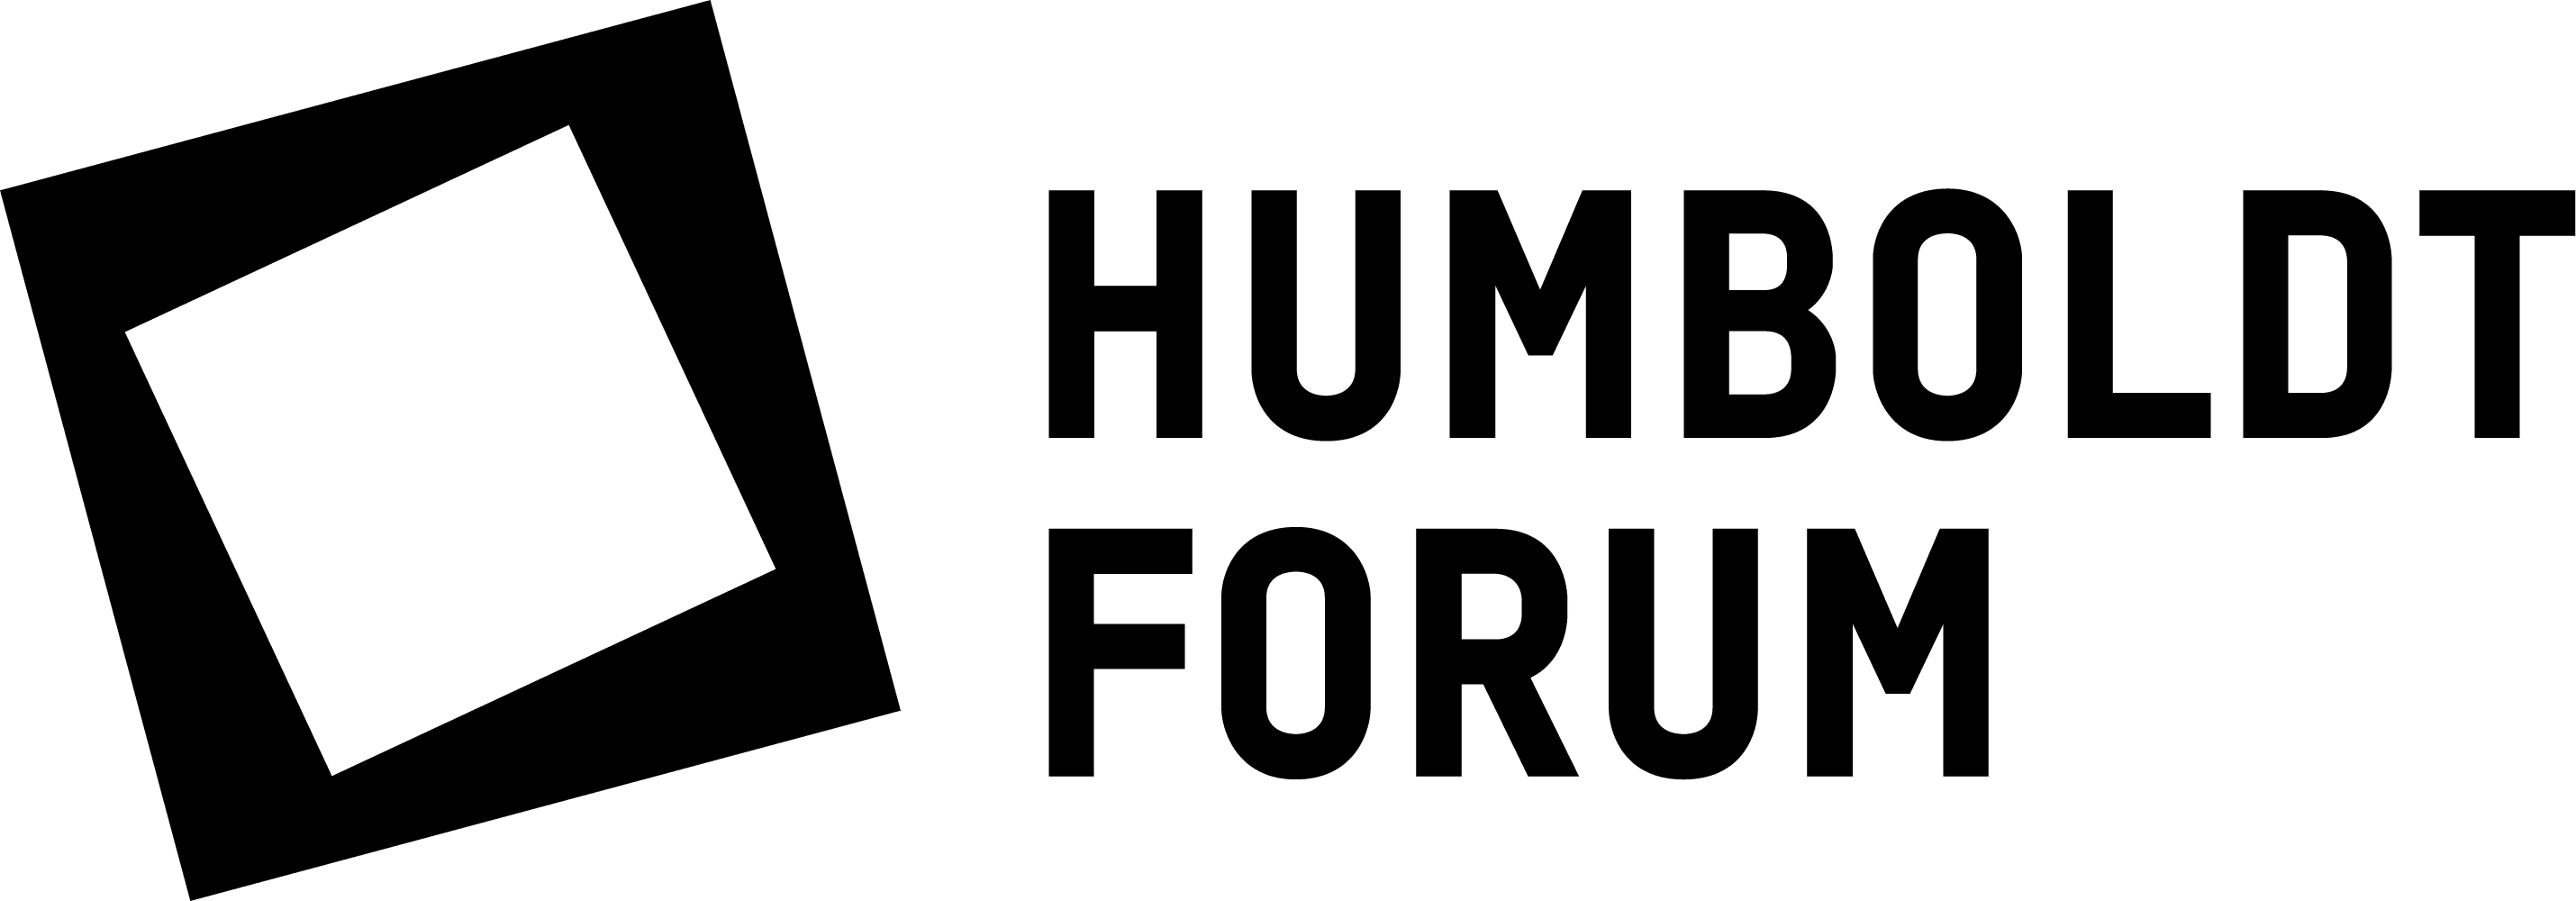 Humboldt Forum logo